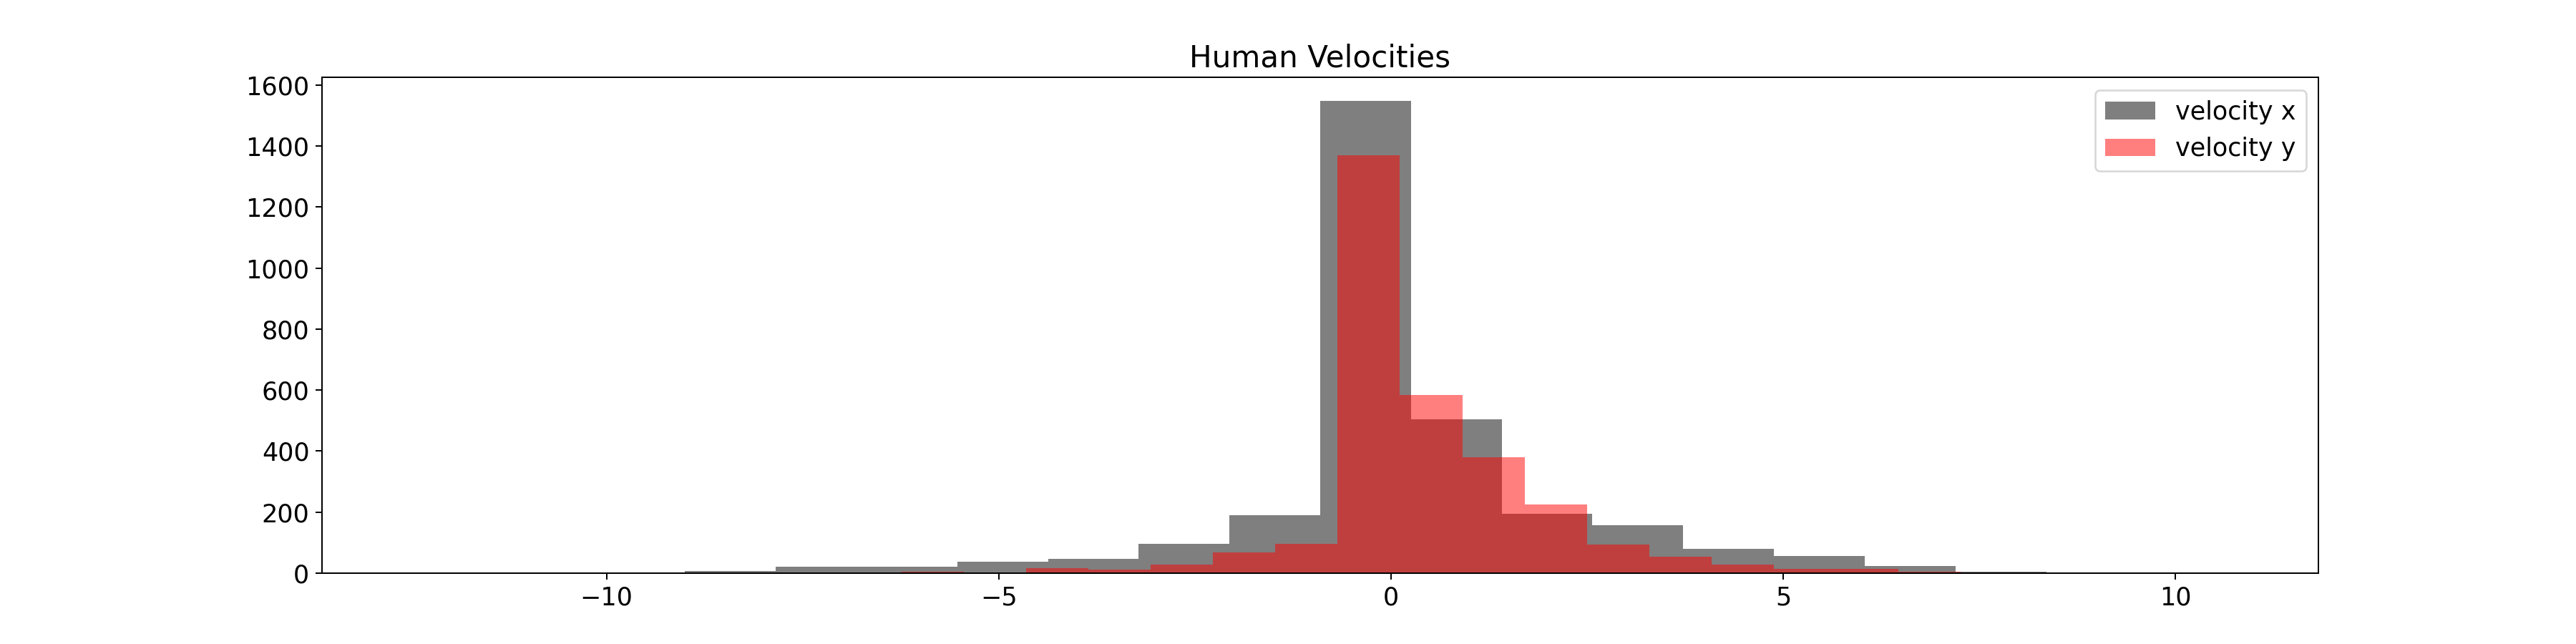 Human Velocities